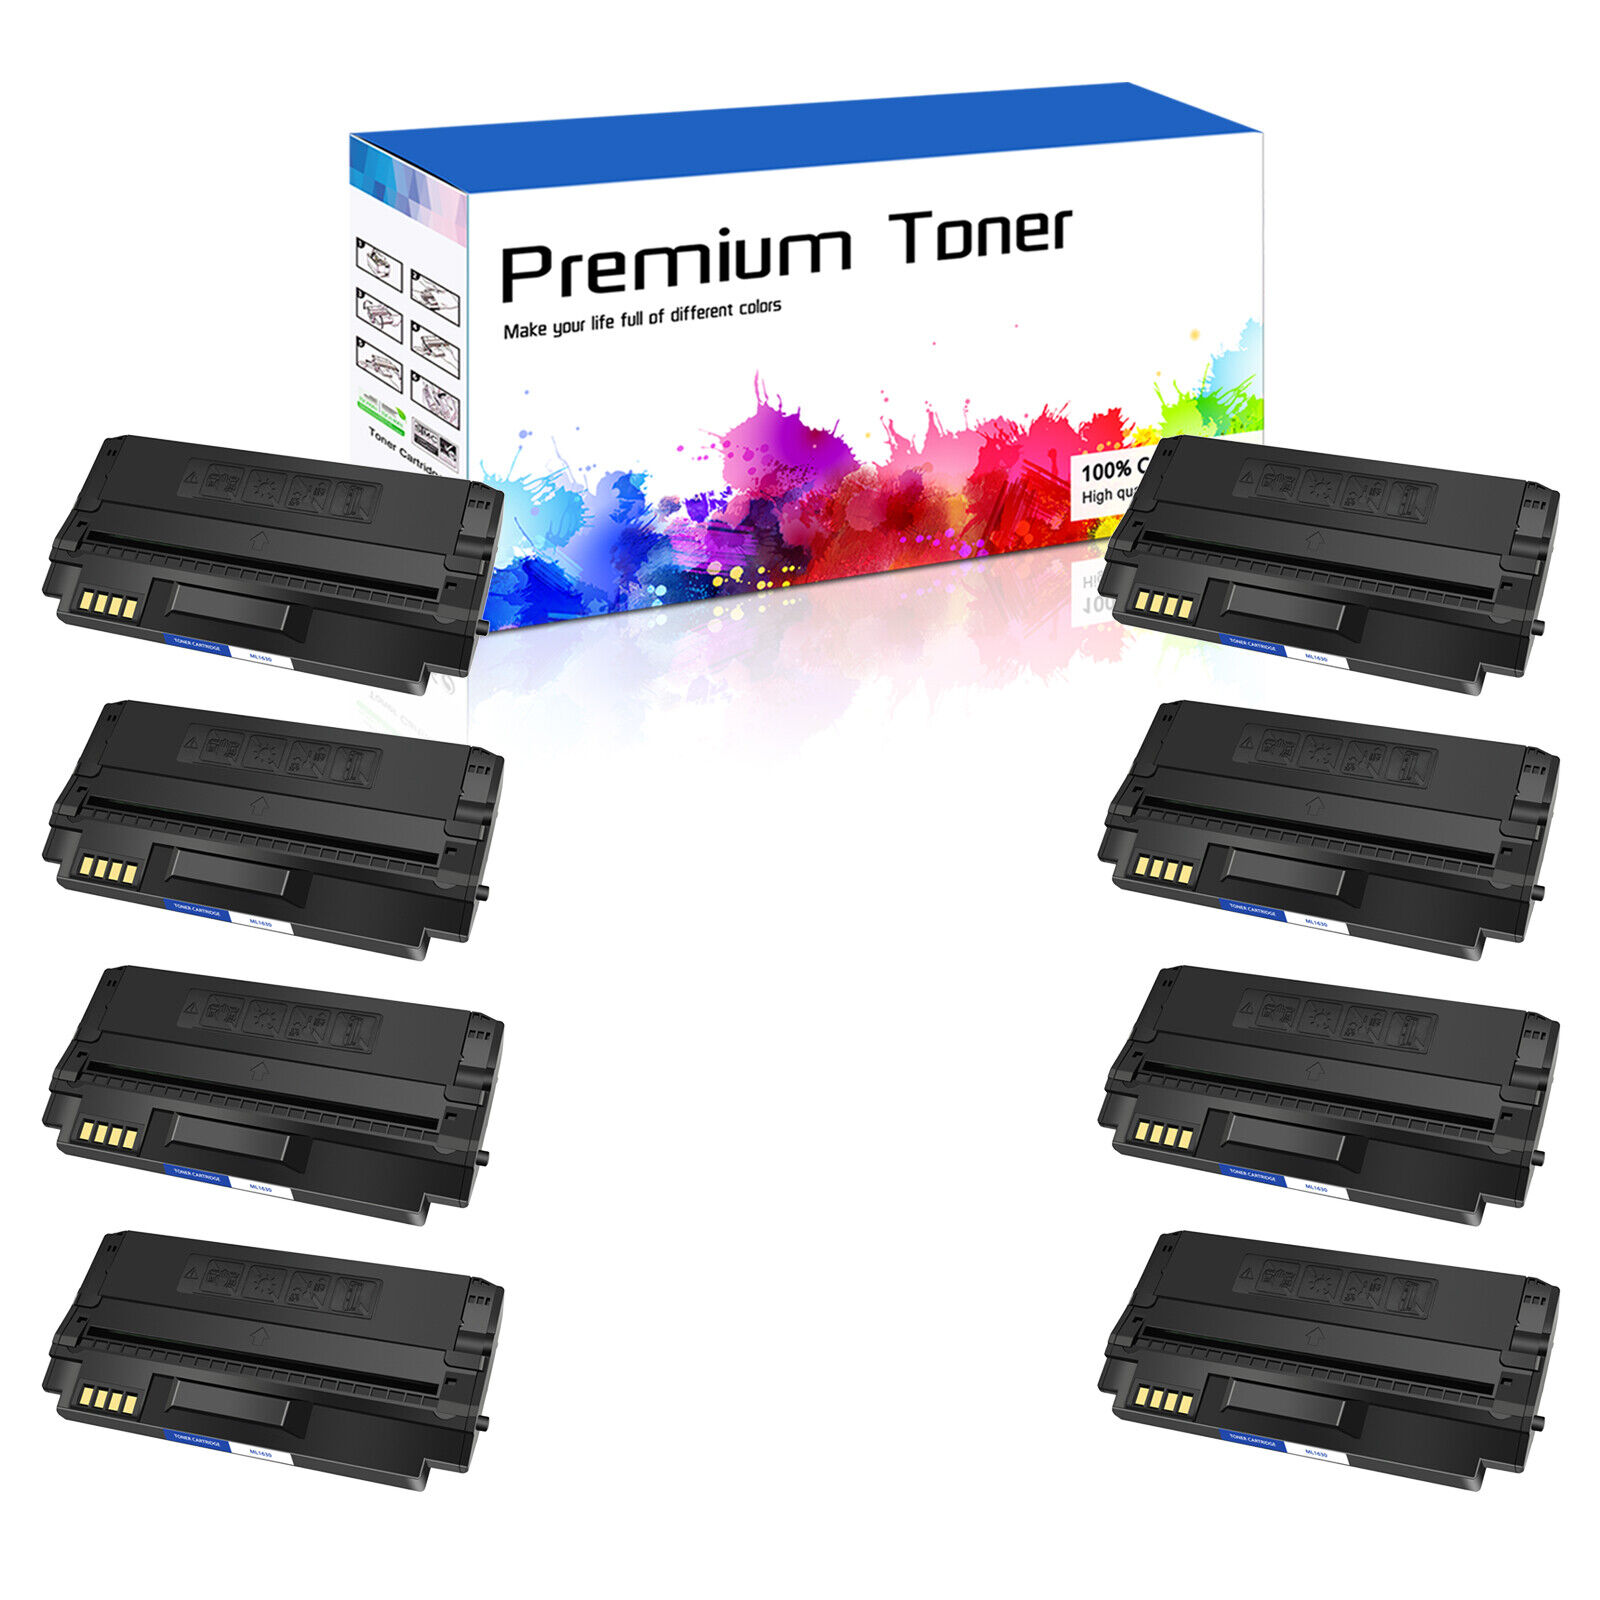 8PK High Yield ML1630 Black Toner Cartridge for Samsung ML-1630 ML-1630W Printer